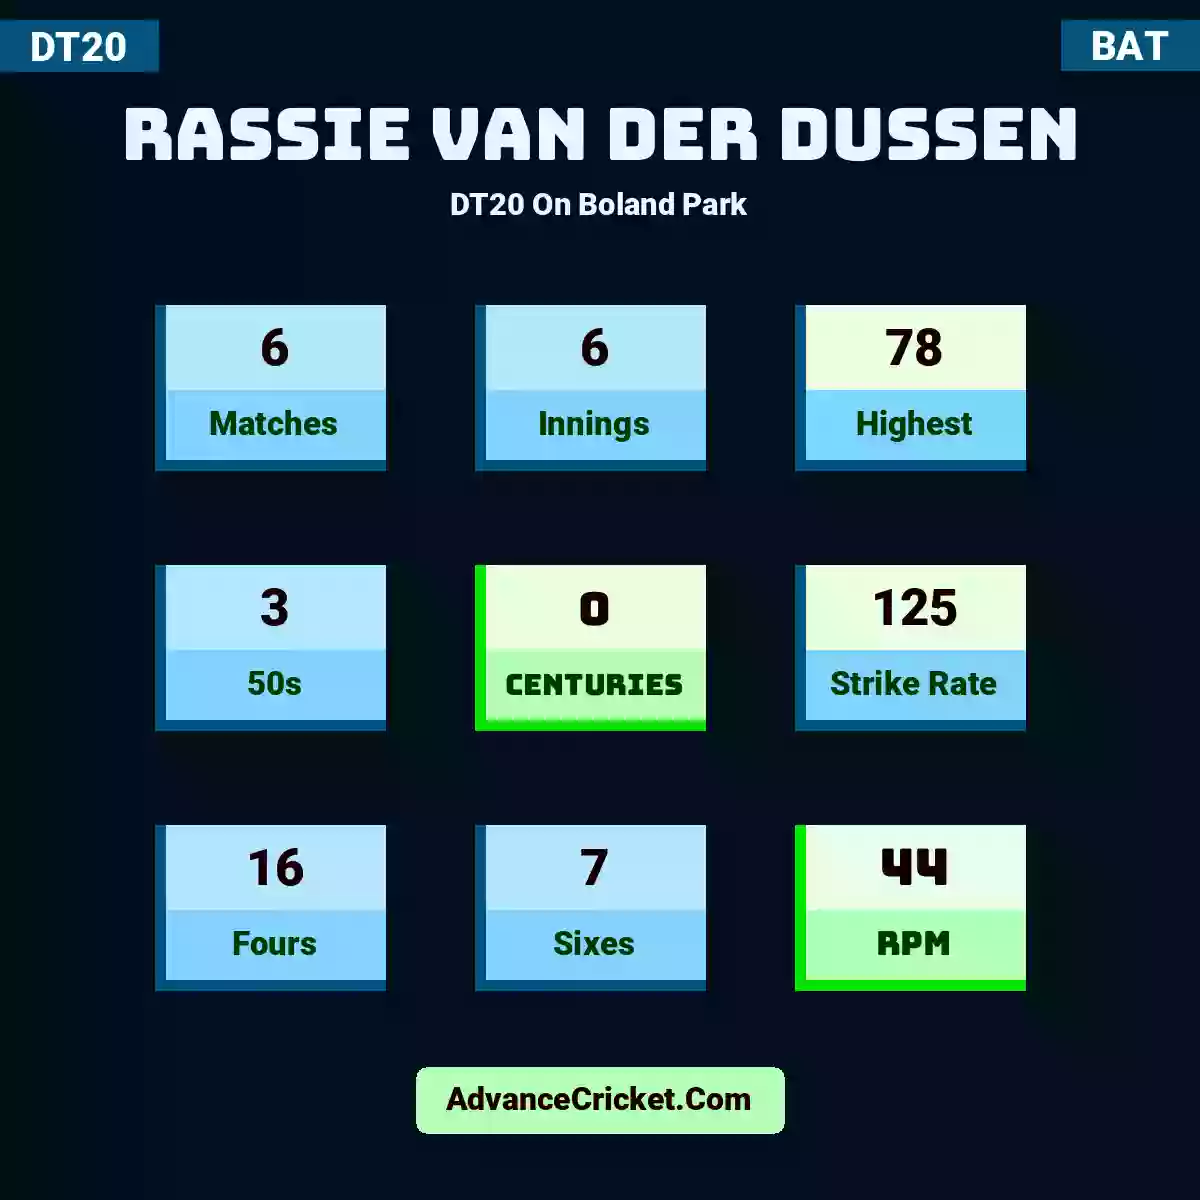 Rassie van der Dussen DT20  On Boland Park, Rassie van der Dussen played 6 matches, scored 78 runs as highest, 3 half-centuries, and 0 centuries, with a strike rate of 125. R.Dussen hit 16 fours and 7 sixes, with an RPM of 44.